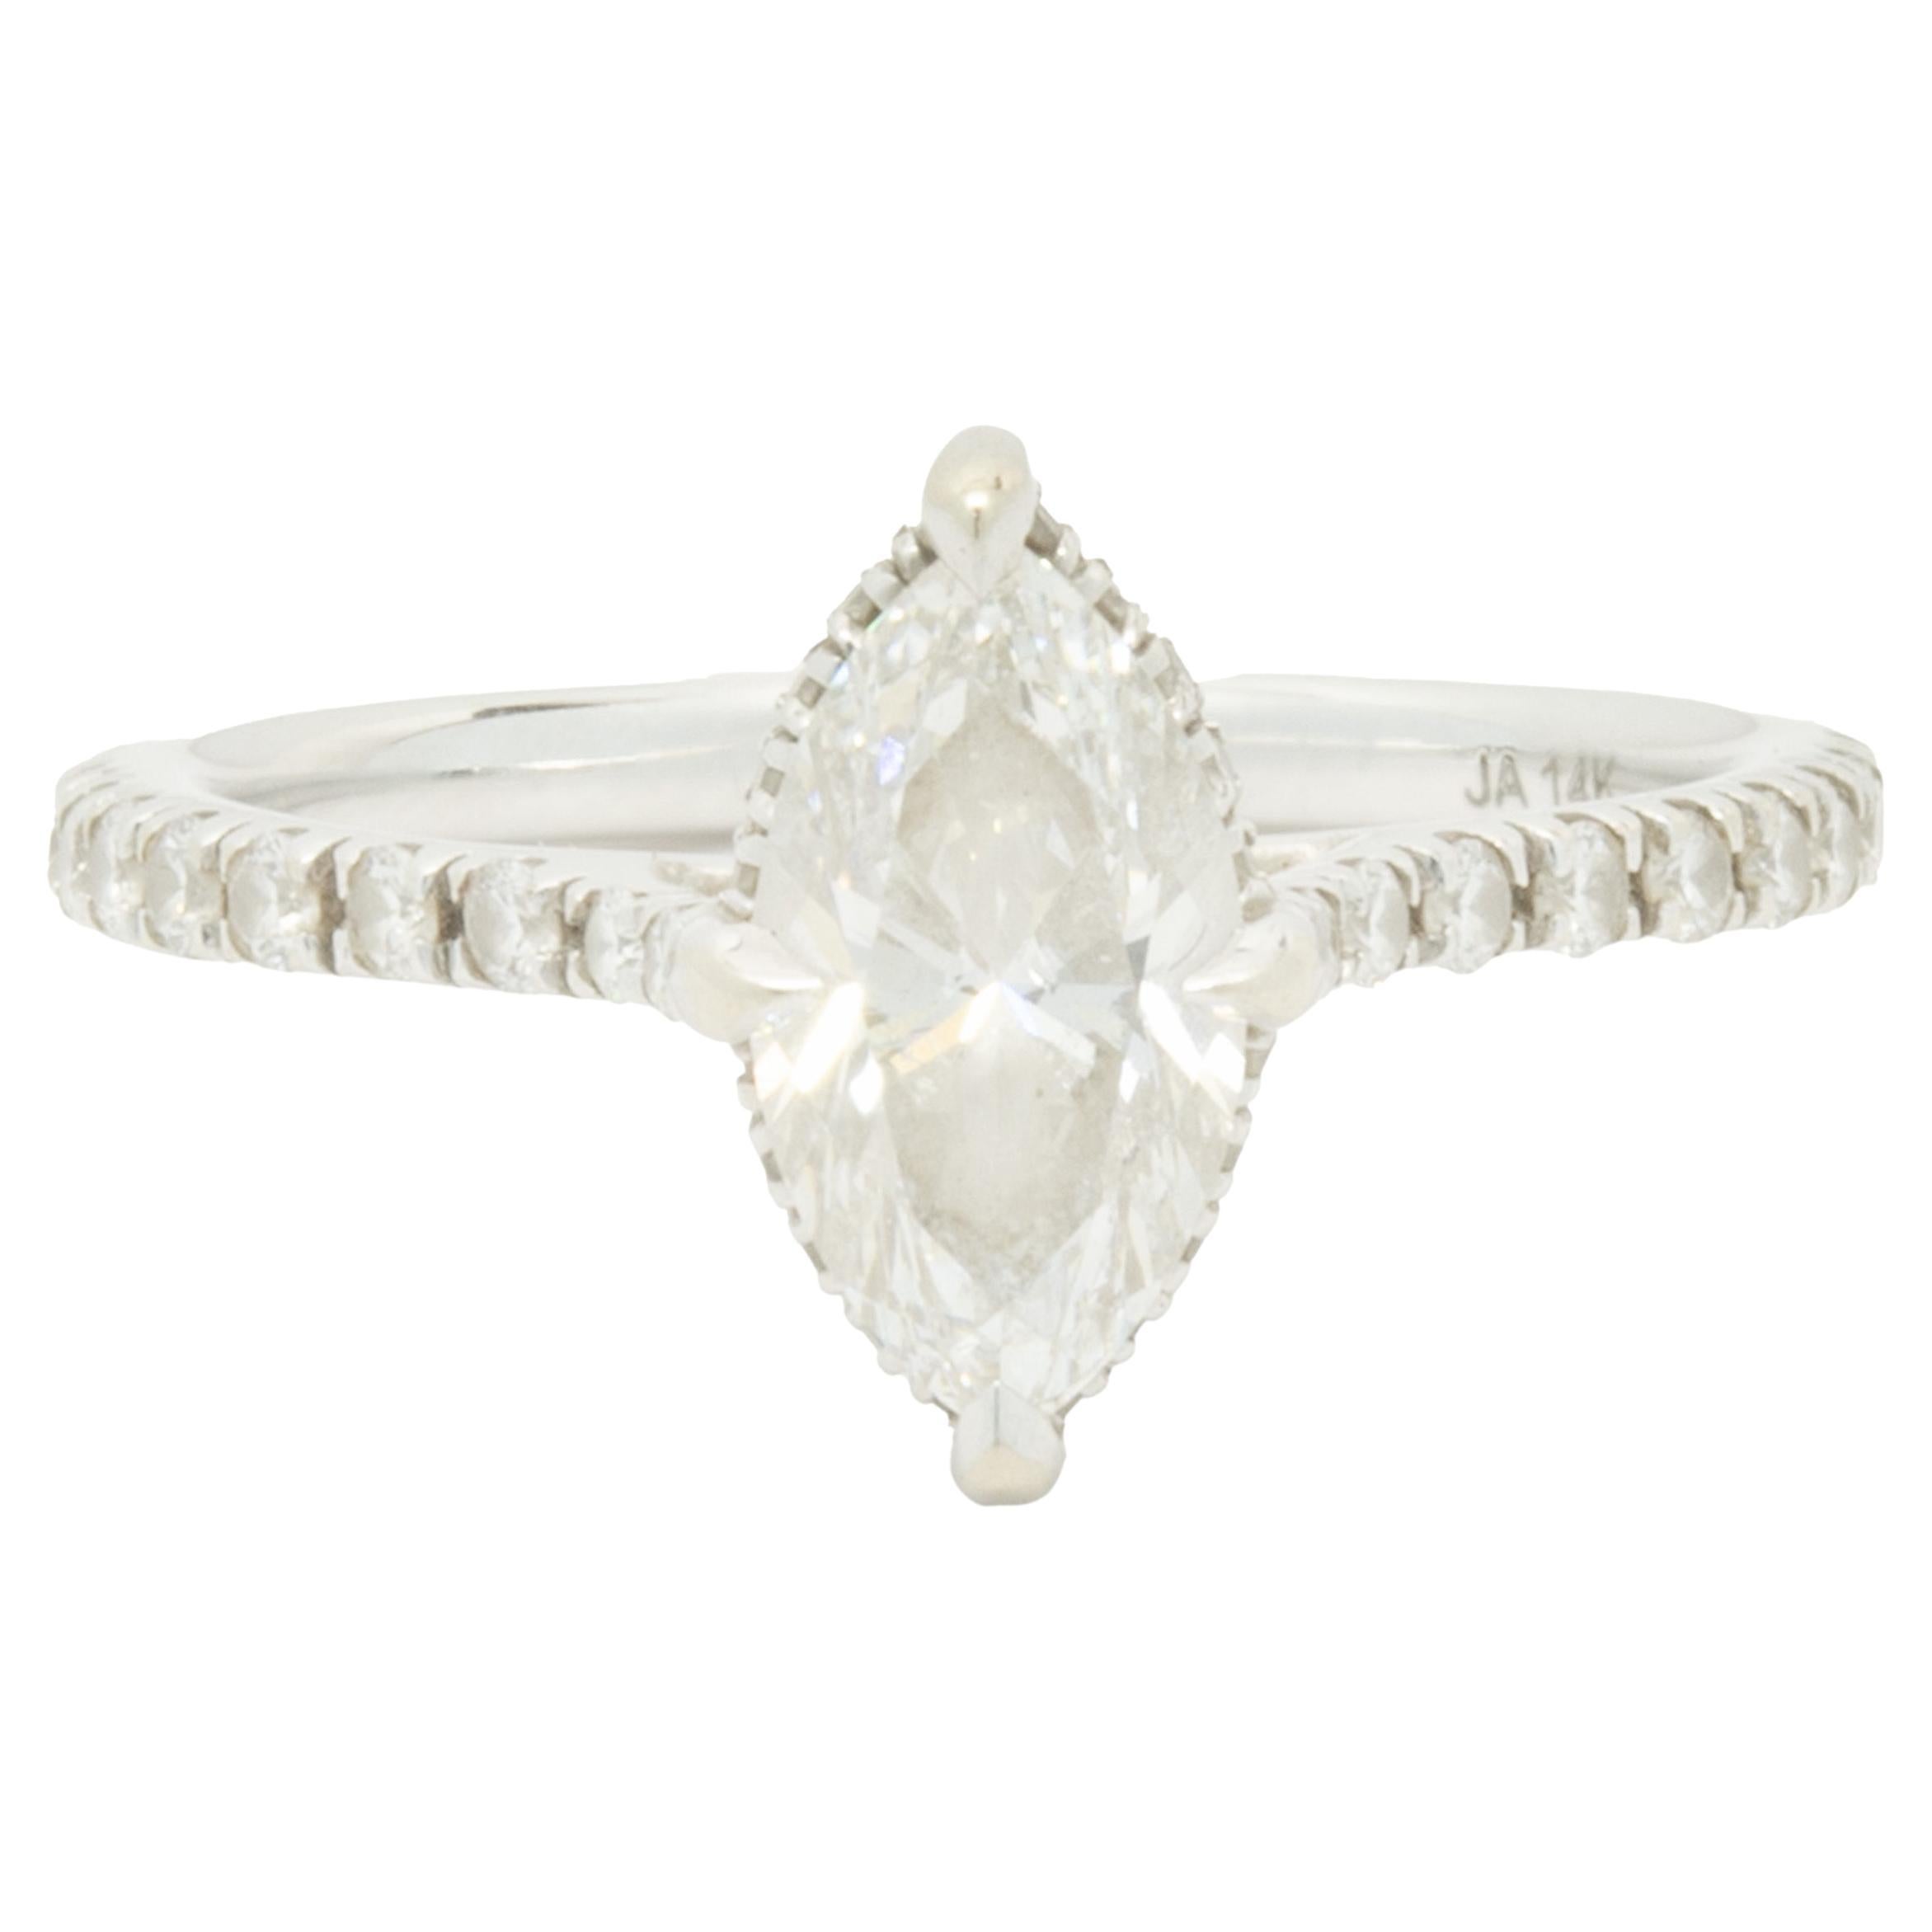 14 Karat White Gold Marquise Cut Diamond Engagement Ring